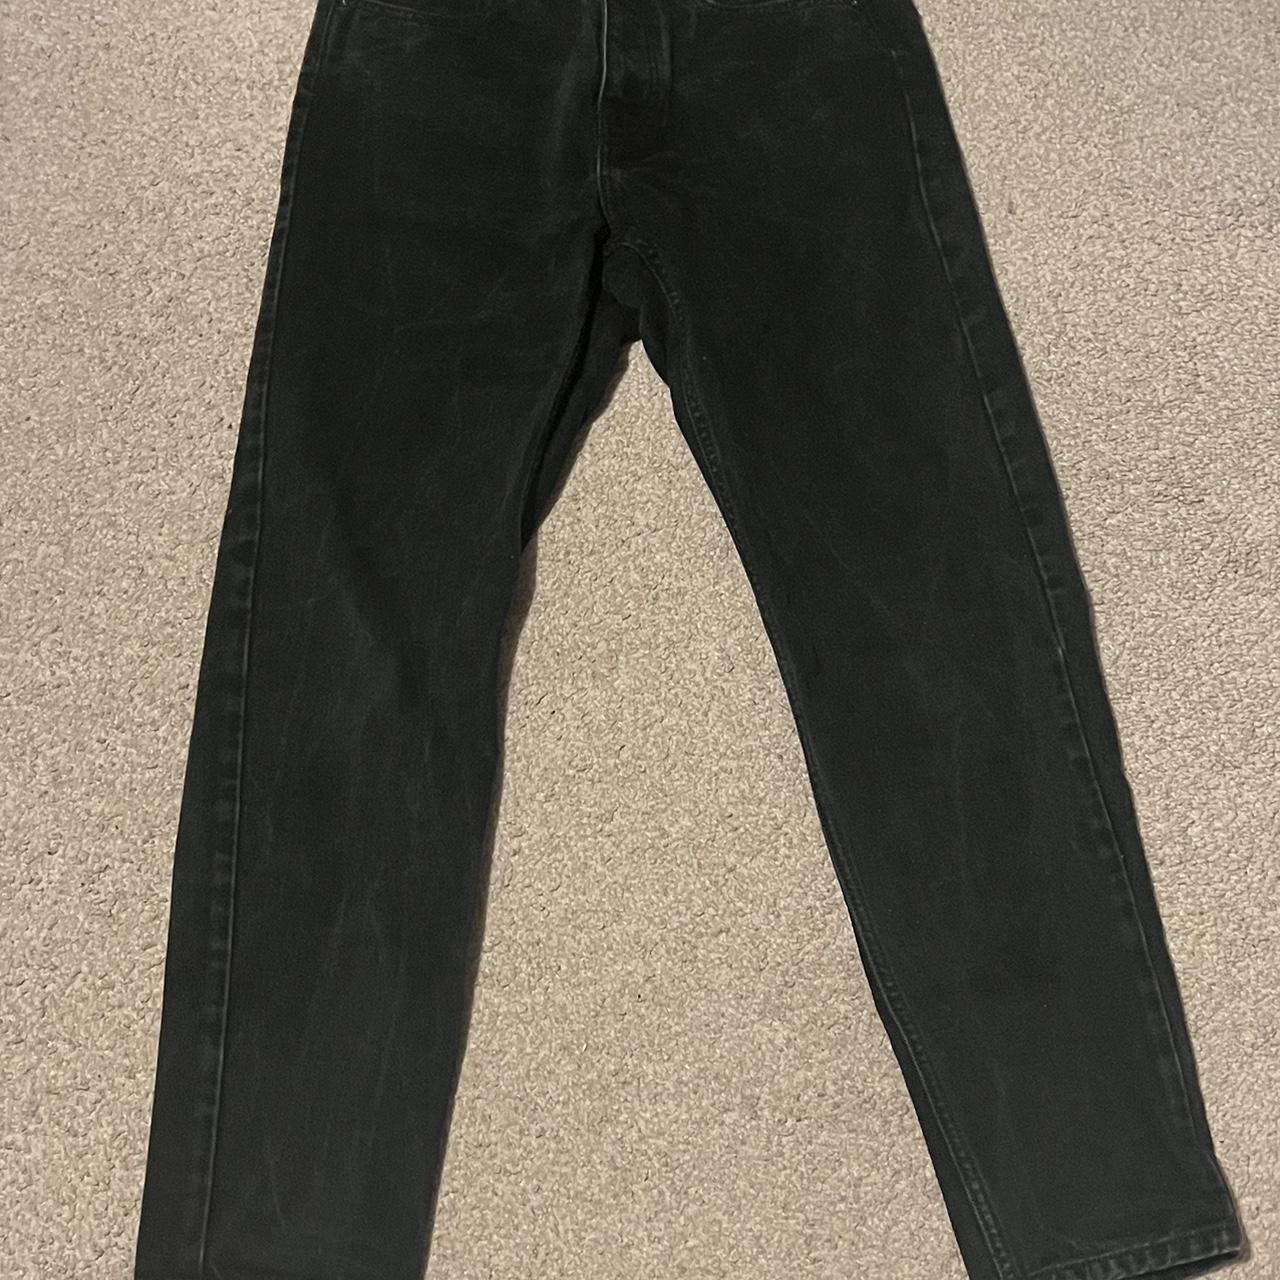 Black carhartt jeans - Depop